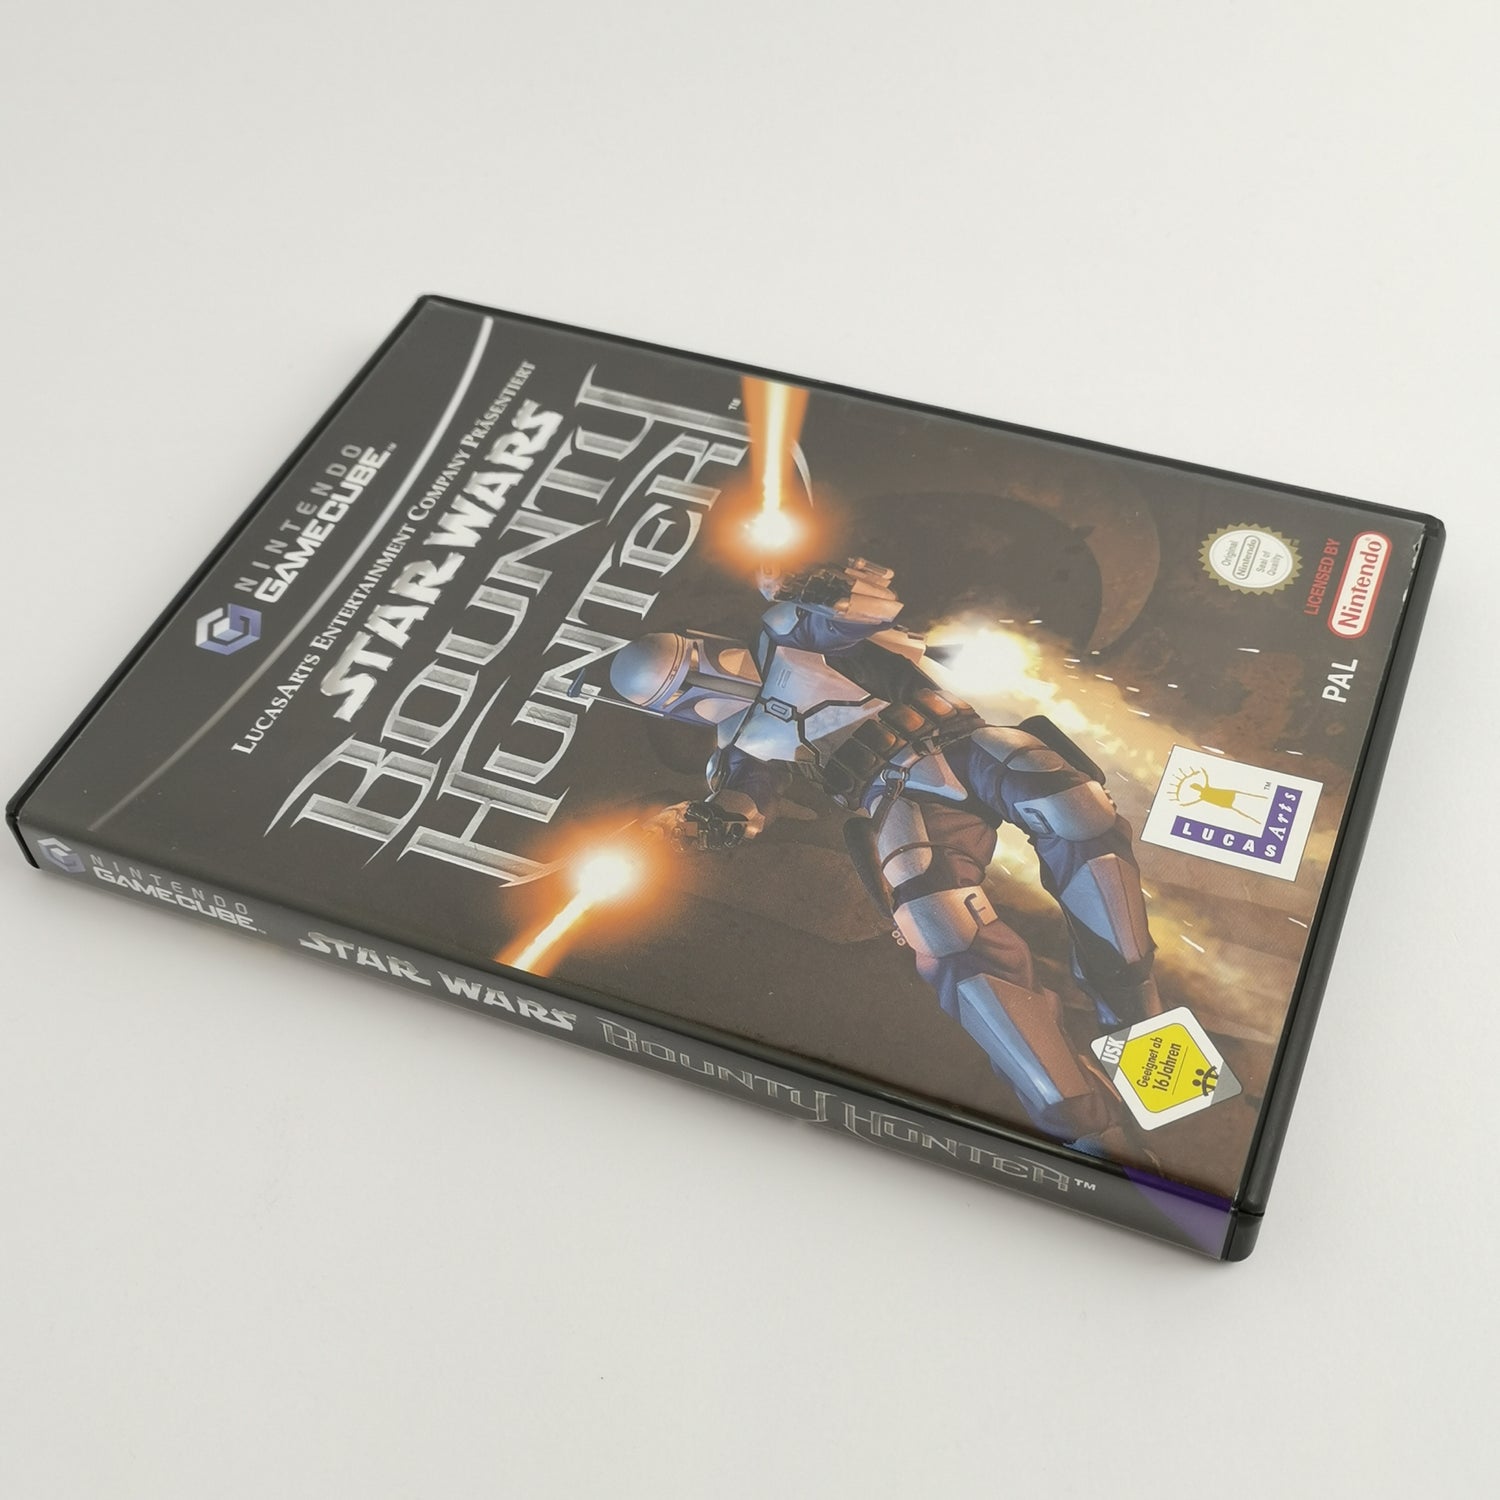 Nintendo Gamecube Game: Star Wars Bounty Hunter | German PAL OVP - Lucas Arts